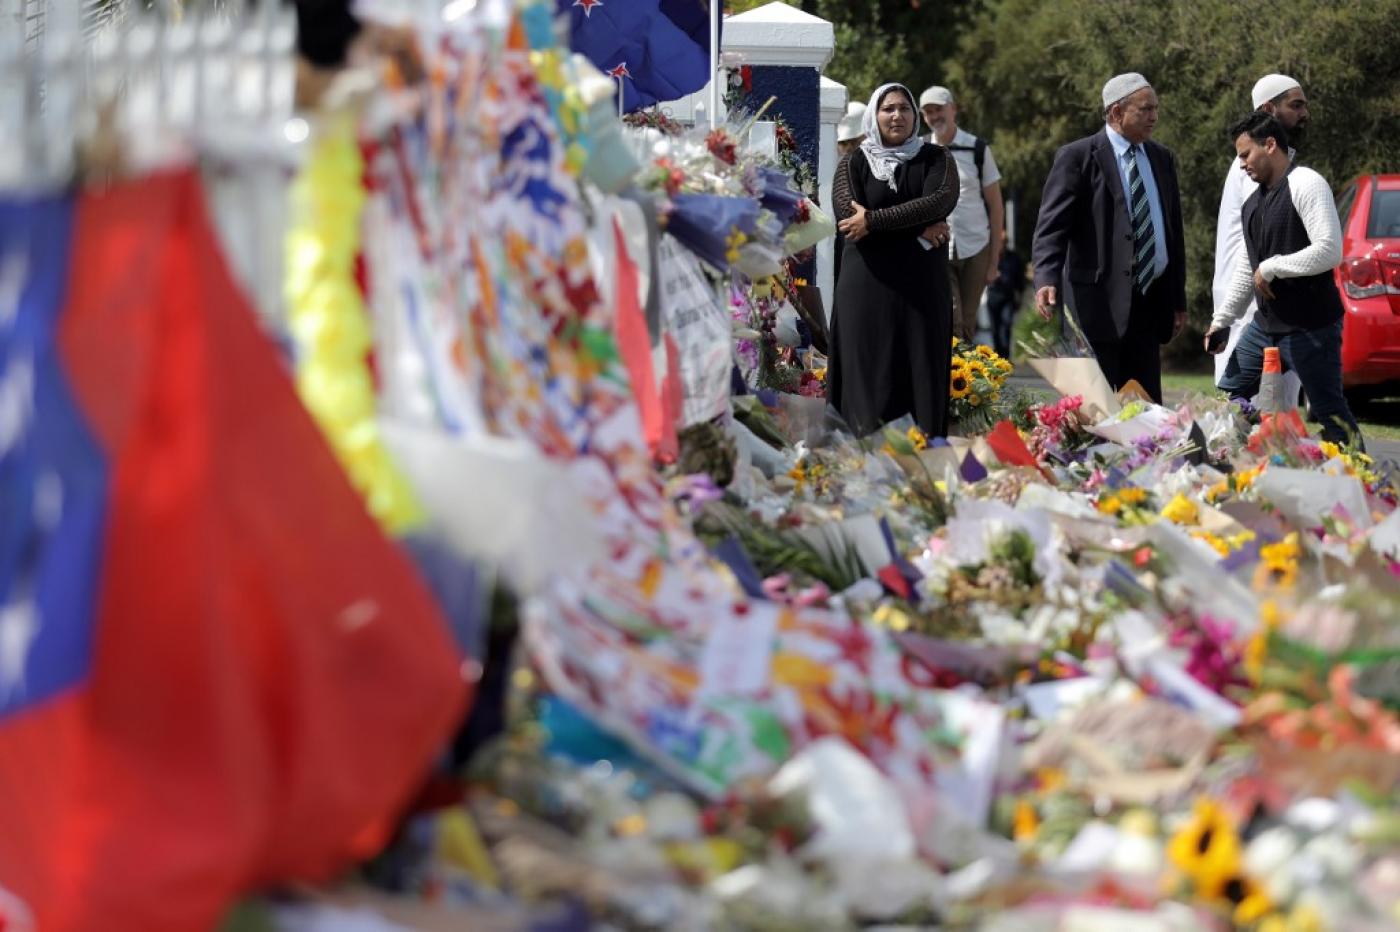 UK News Coverage of Terrorism Puts 'Disproportionate Focus On Muslims'